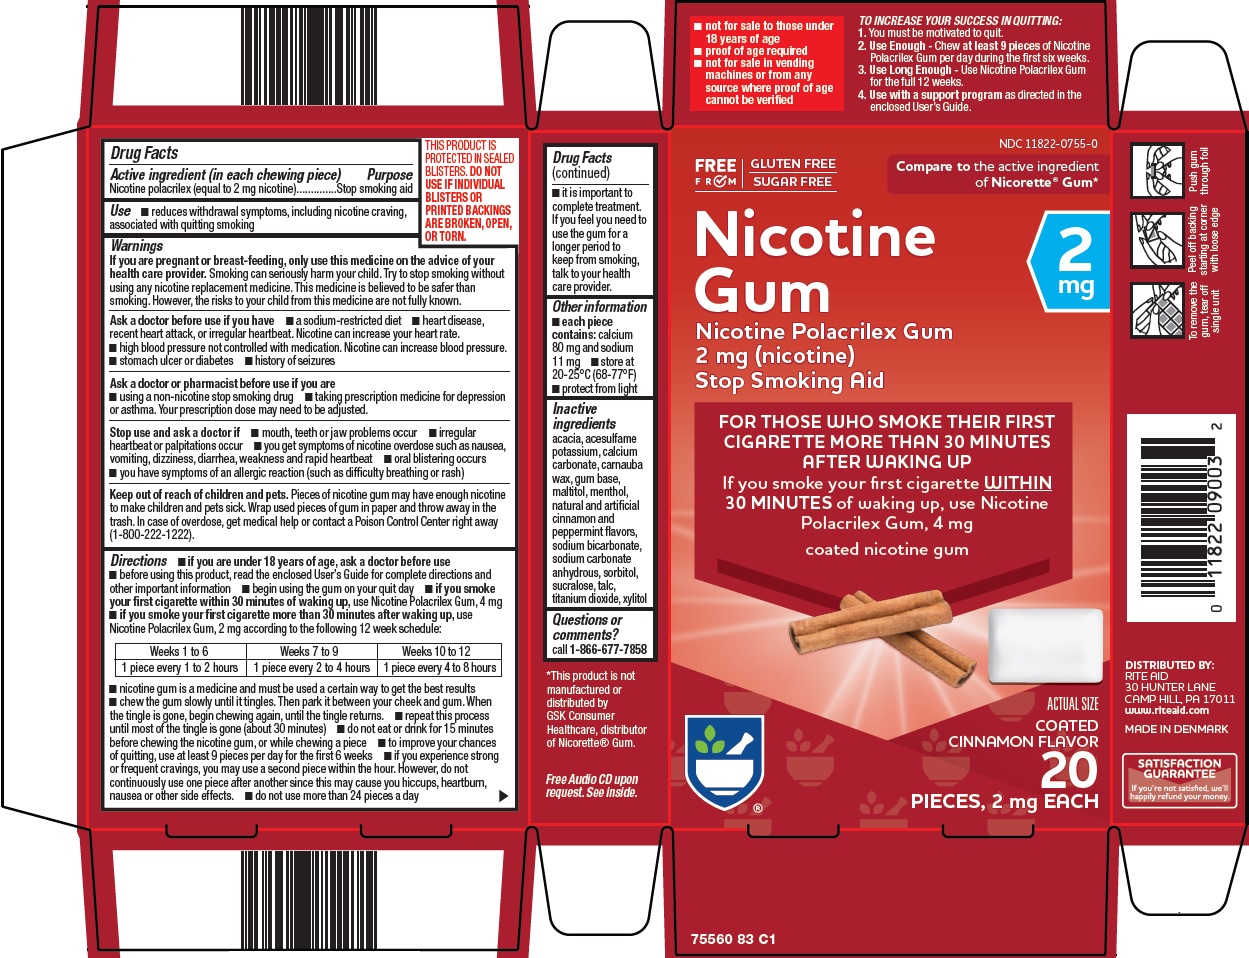 755-83-nicotine-gum